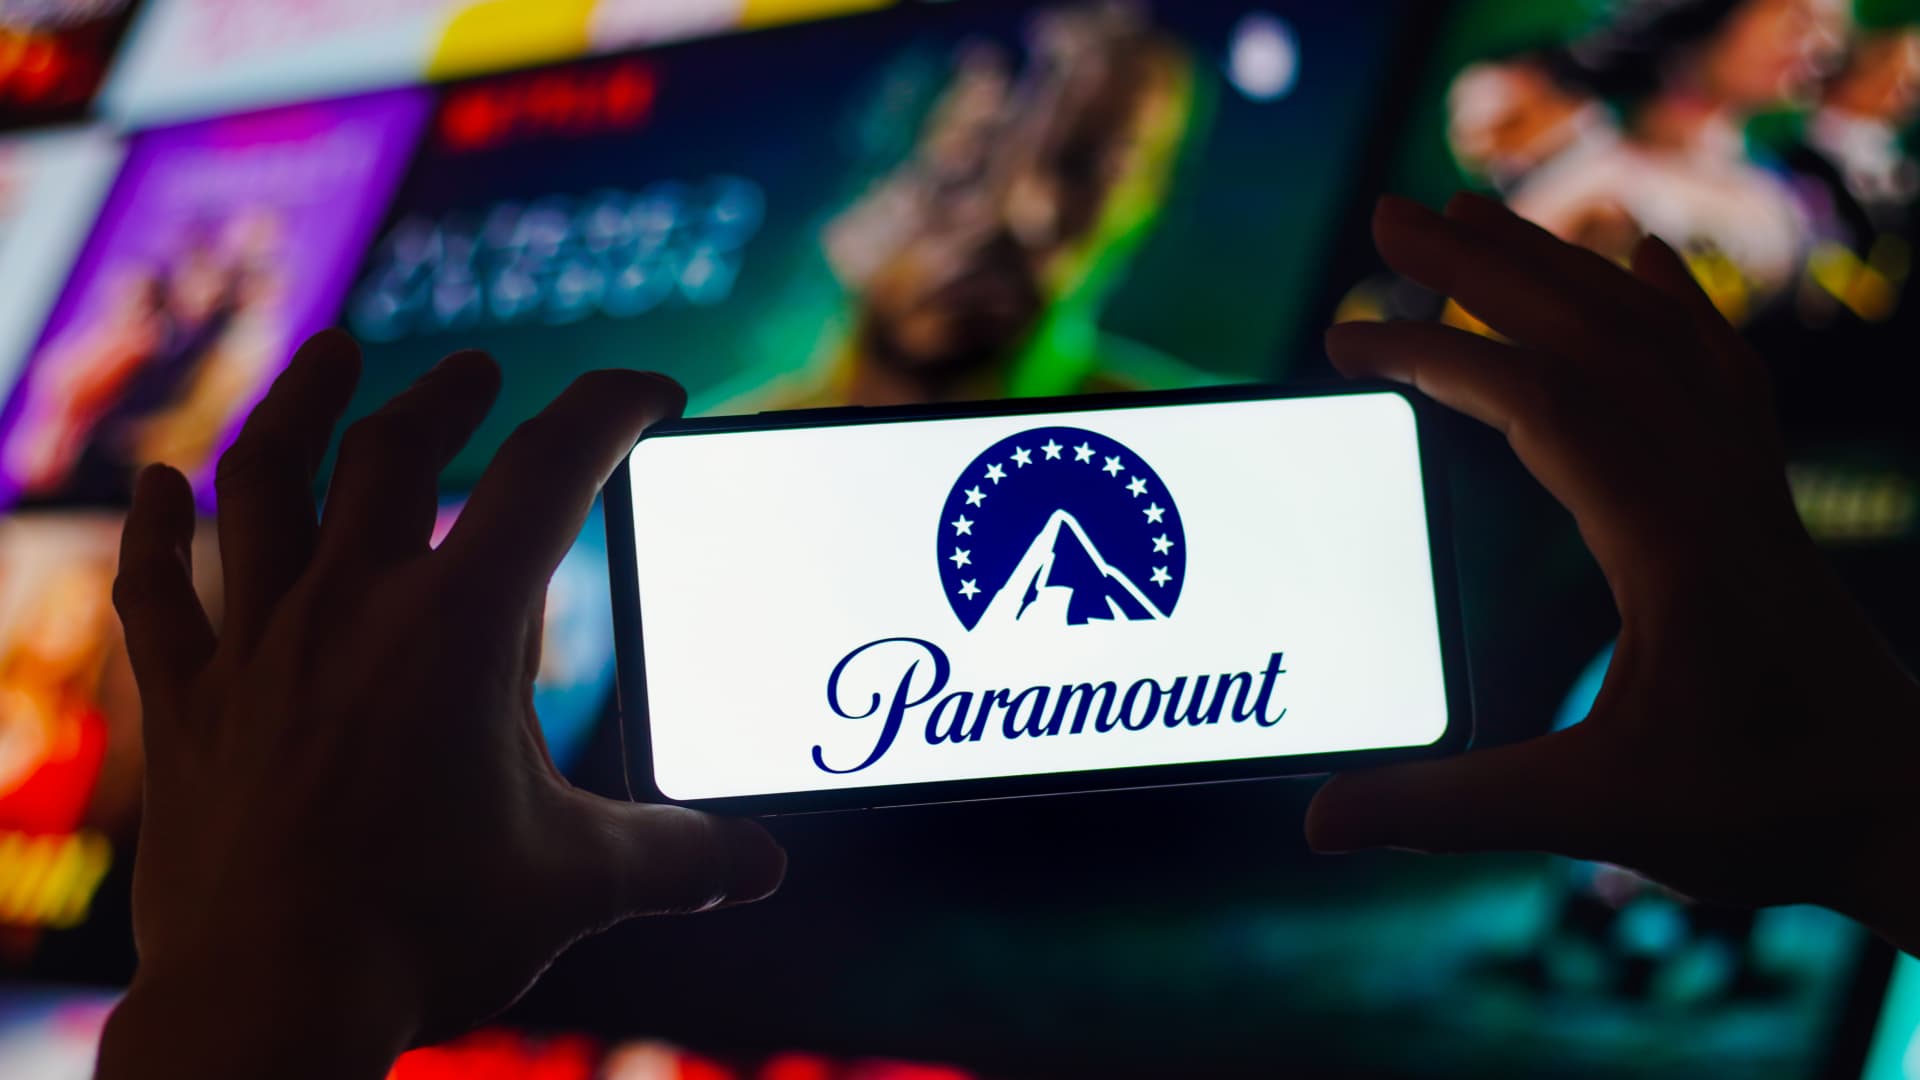 Paramount International shares bounce after Warren Buffett’s Berkshire Hathaway will increase stake